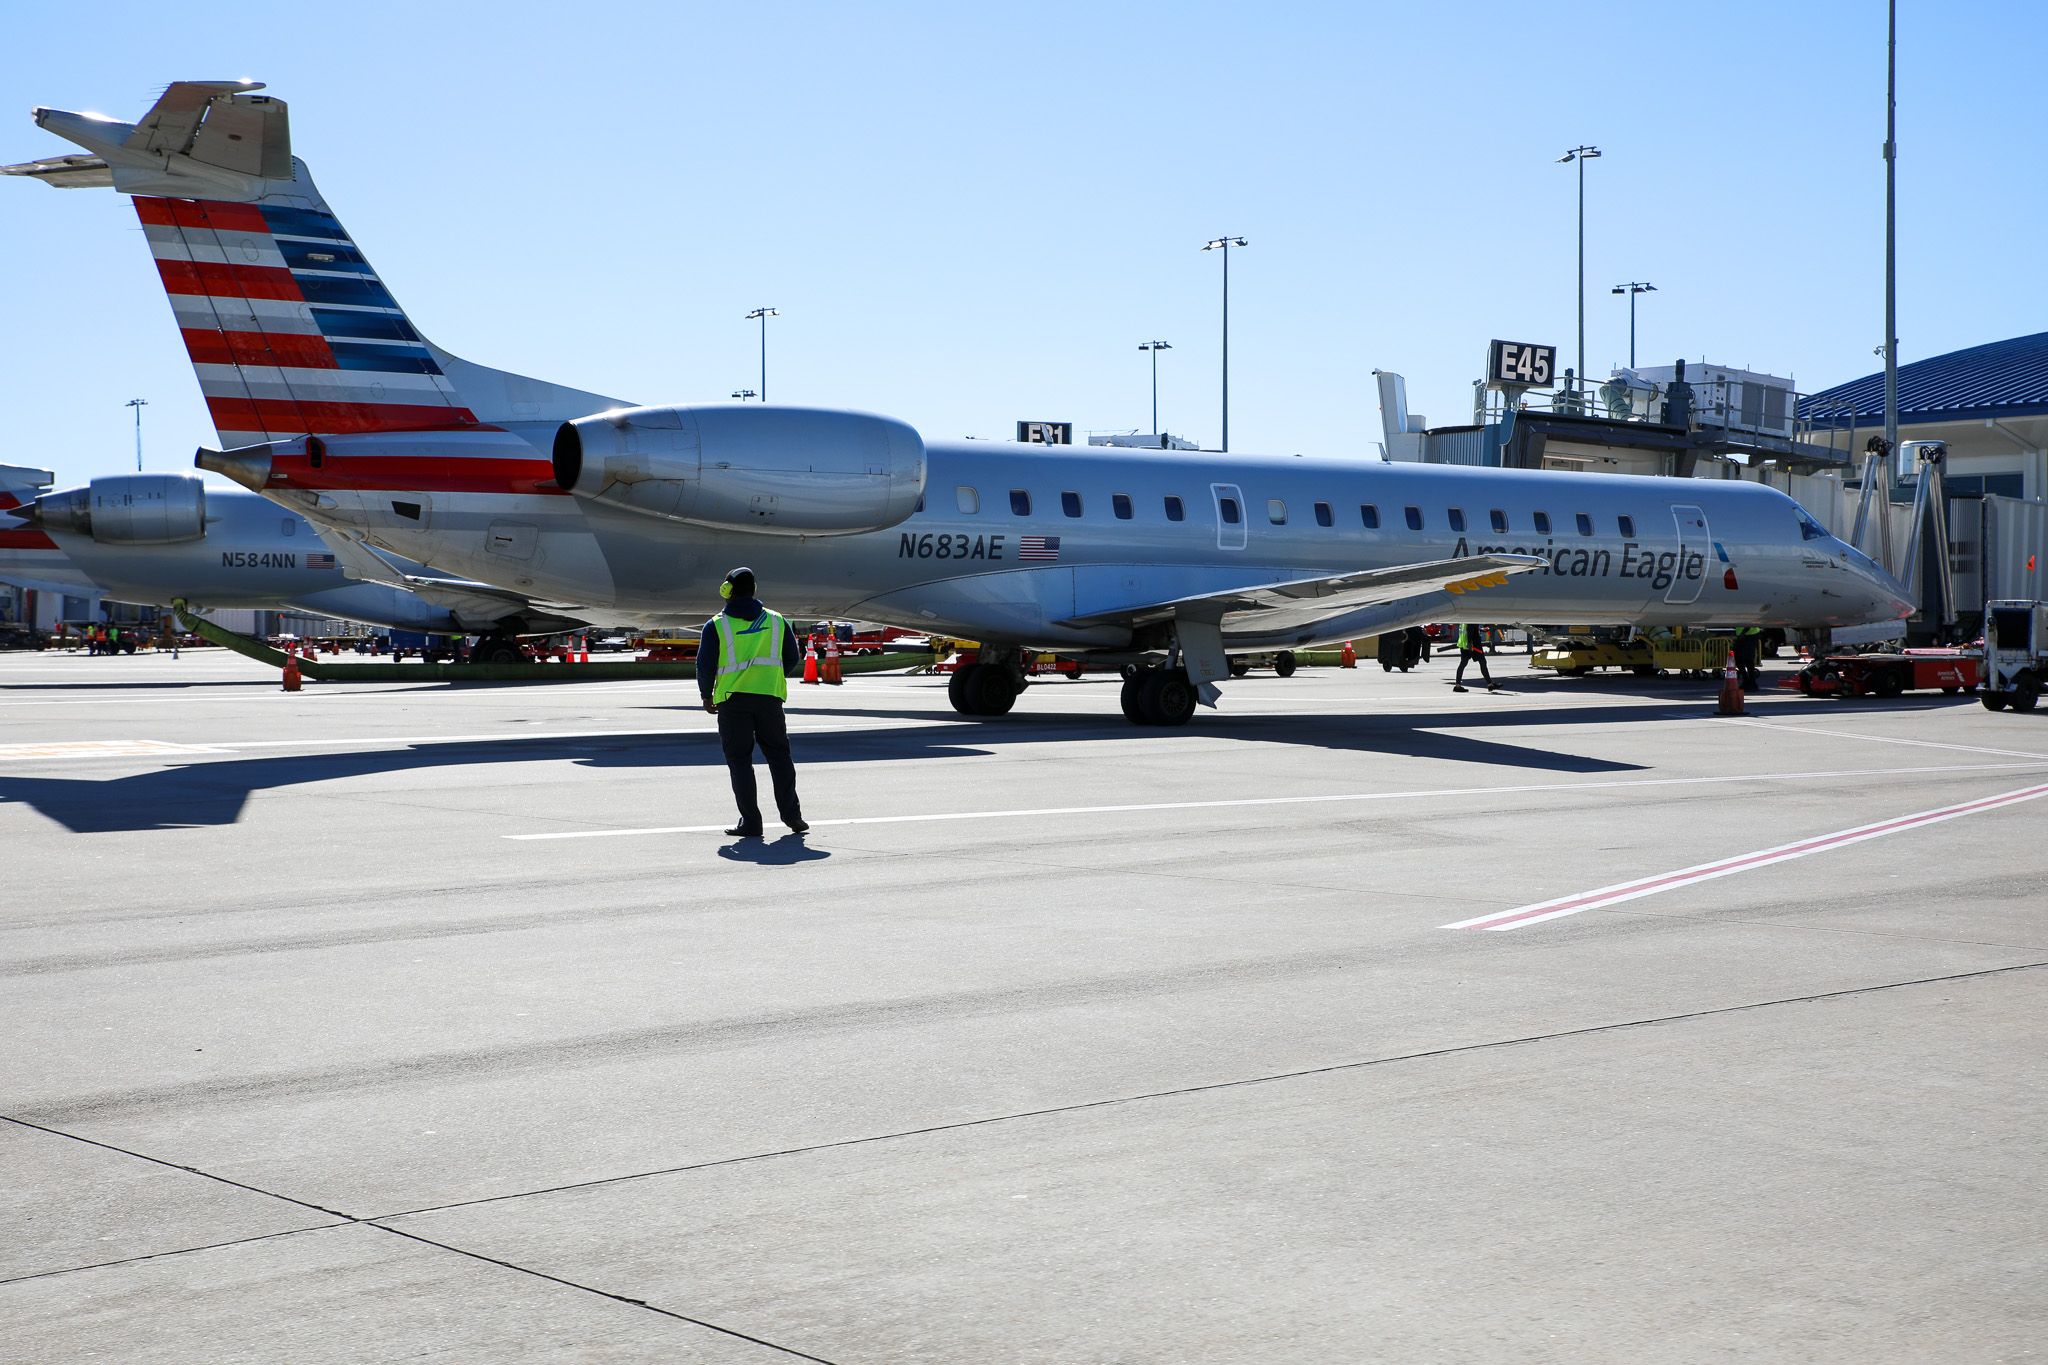 American Eagle (Piedmont Airlines) Embraer ERJ-145 N683AE.